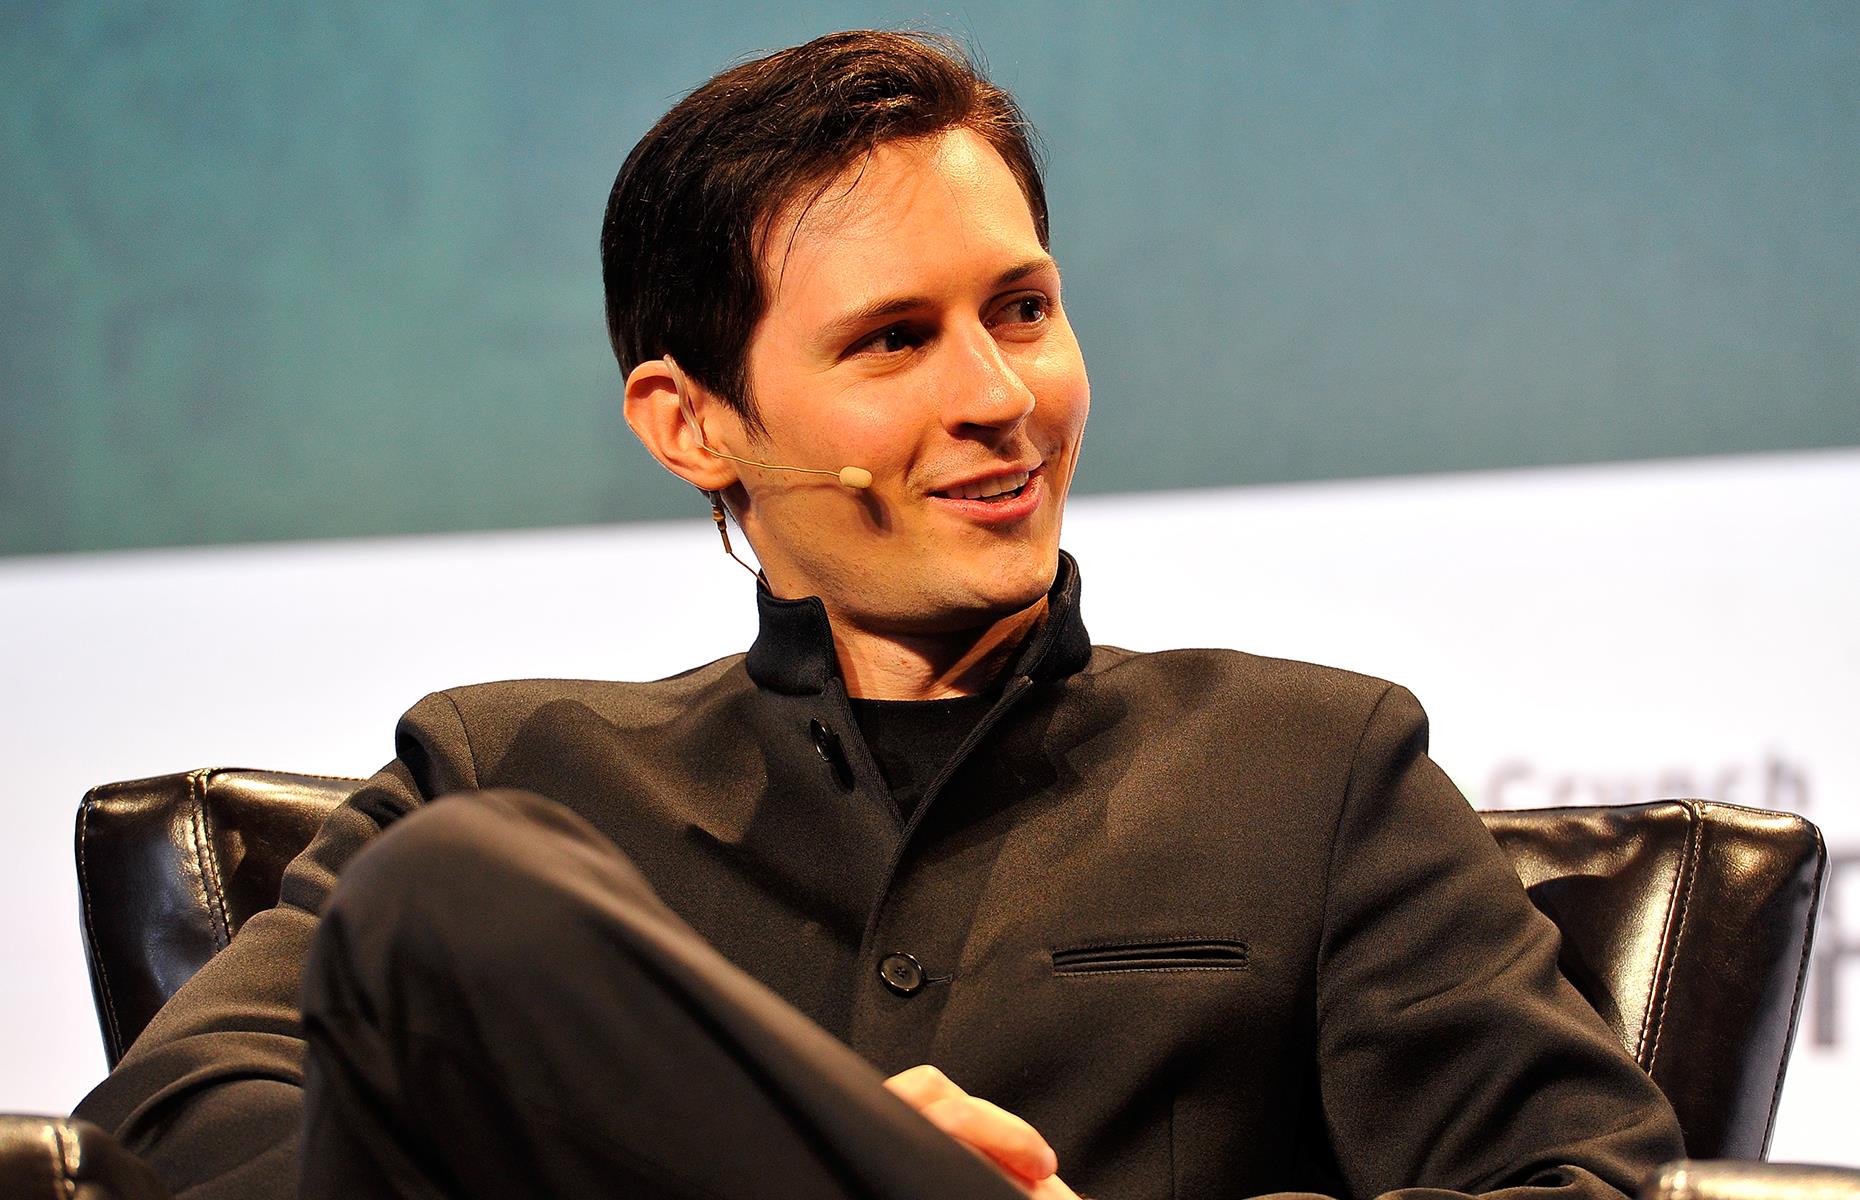 Pavel Durov – 34